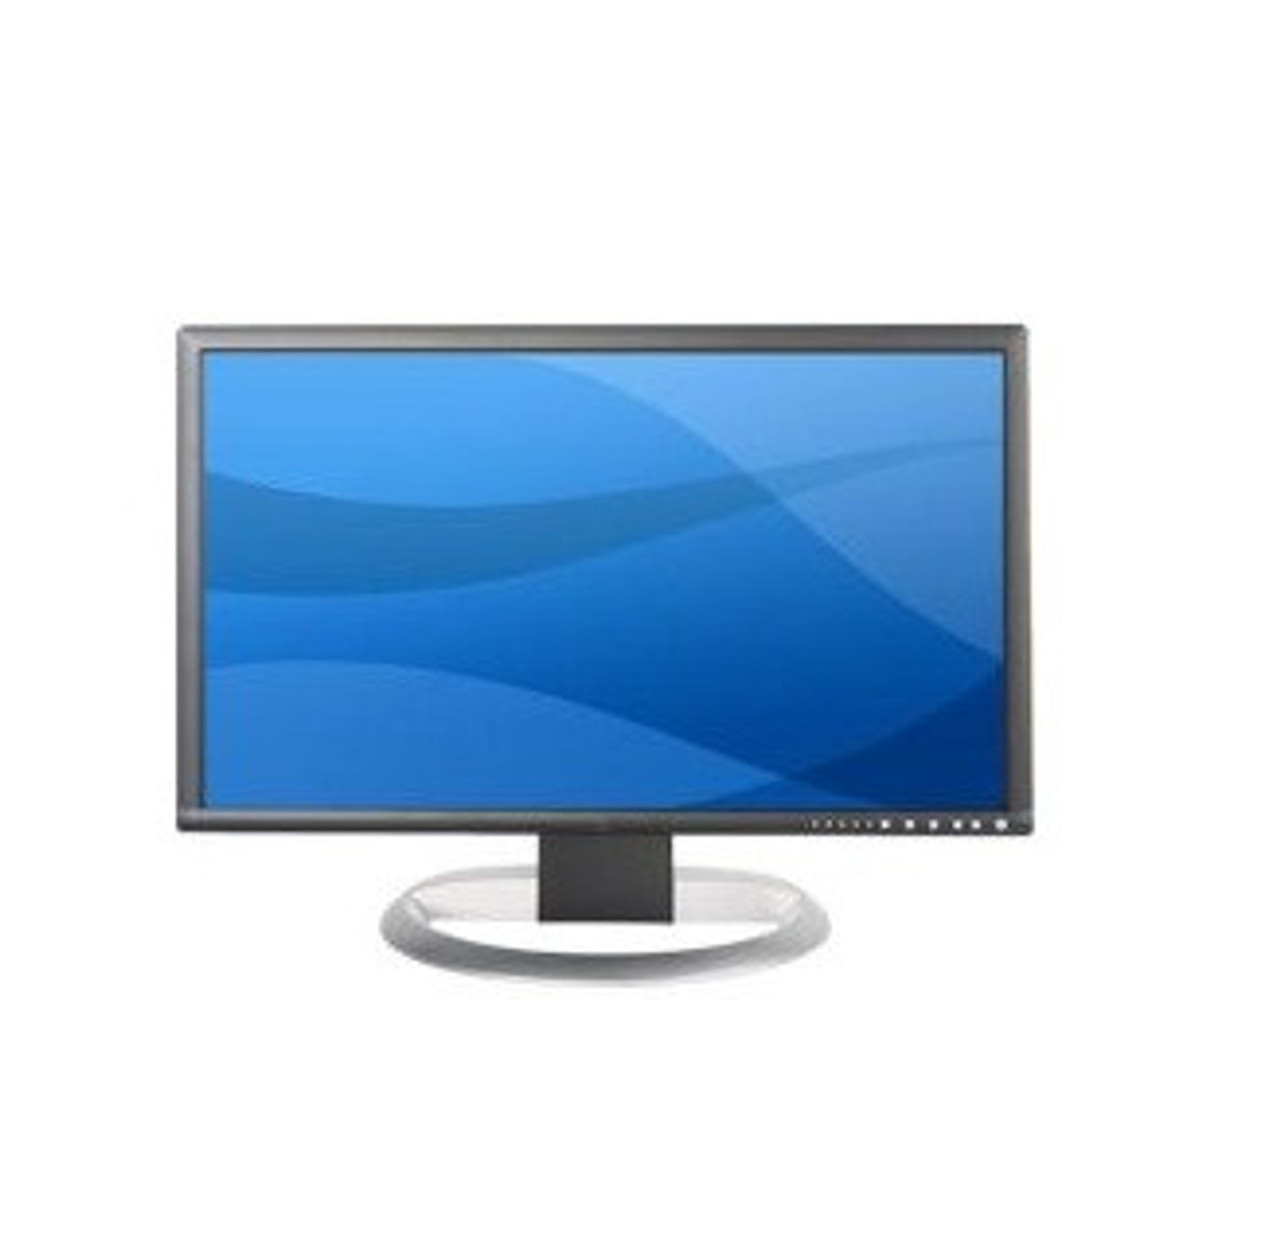 09-E249 - Dell 20-inch Flat Panel LCD Black (Refurbished)